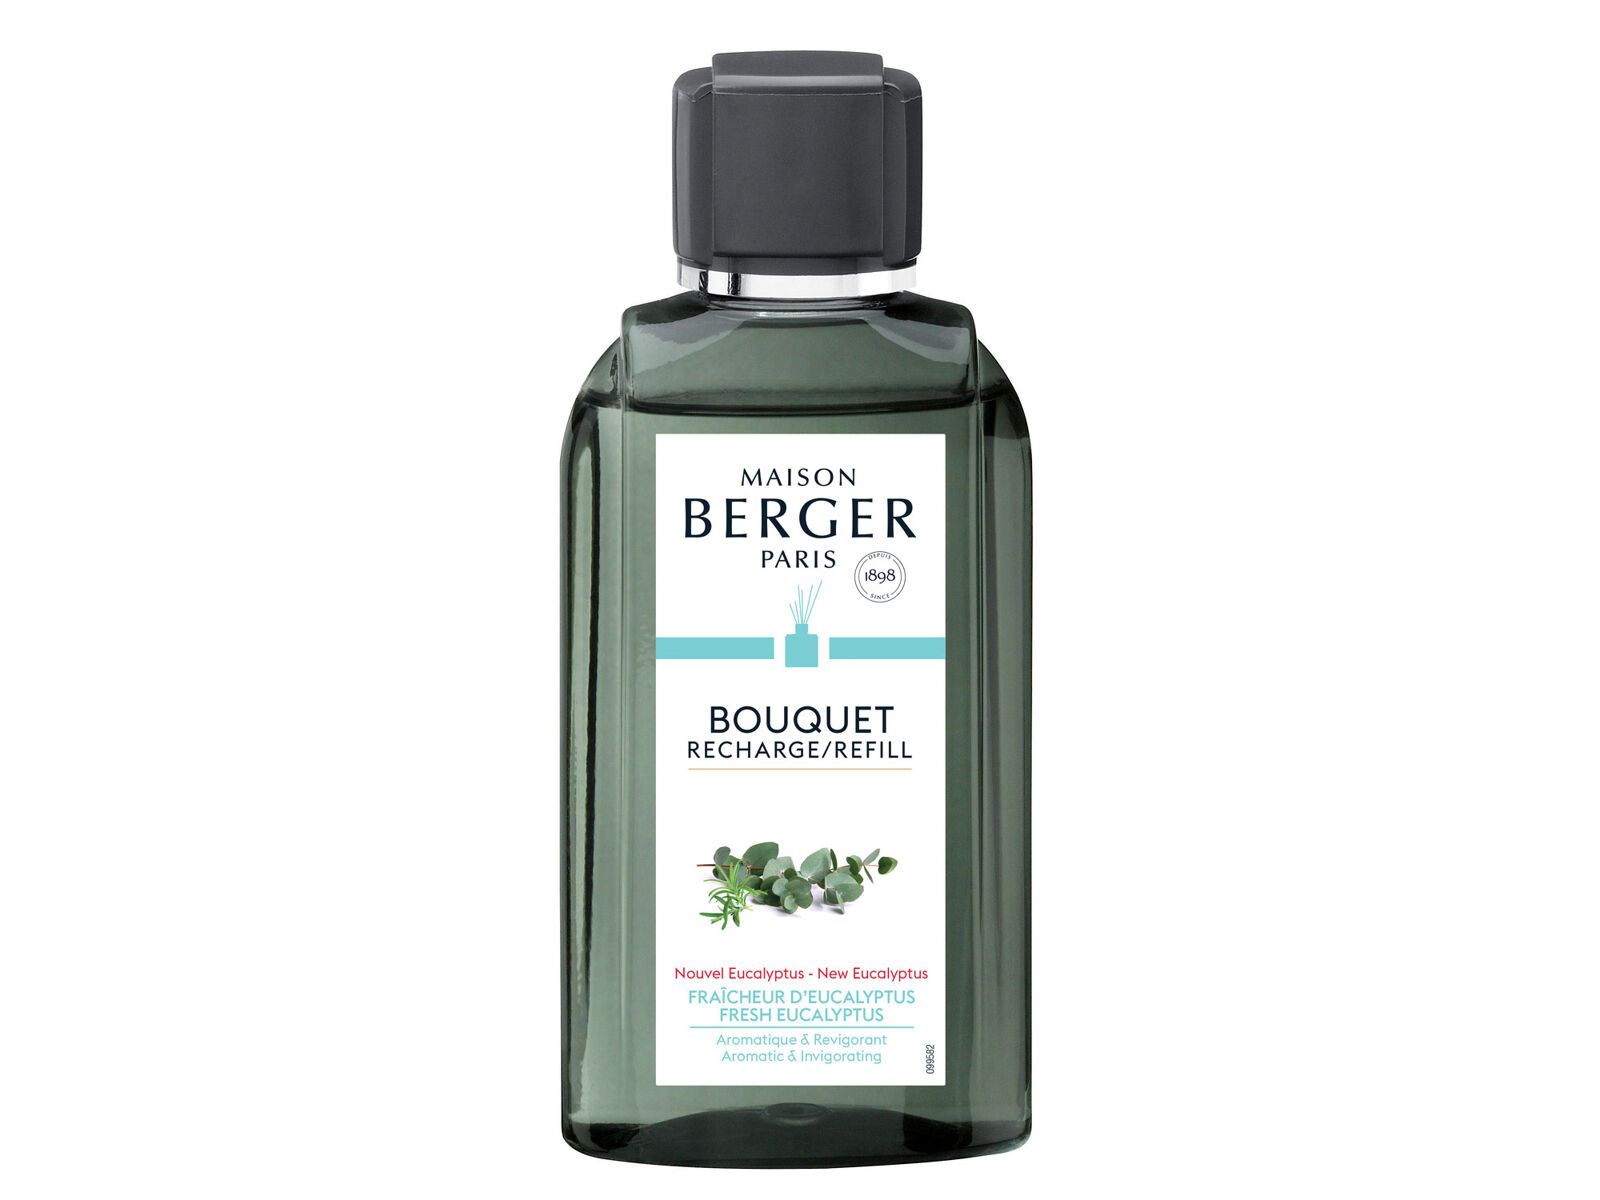 Maison Berger Fraîcheur d'Eucalyptus| Nachfüllflasche für Parfum Bouquets 6238